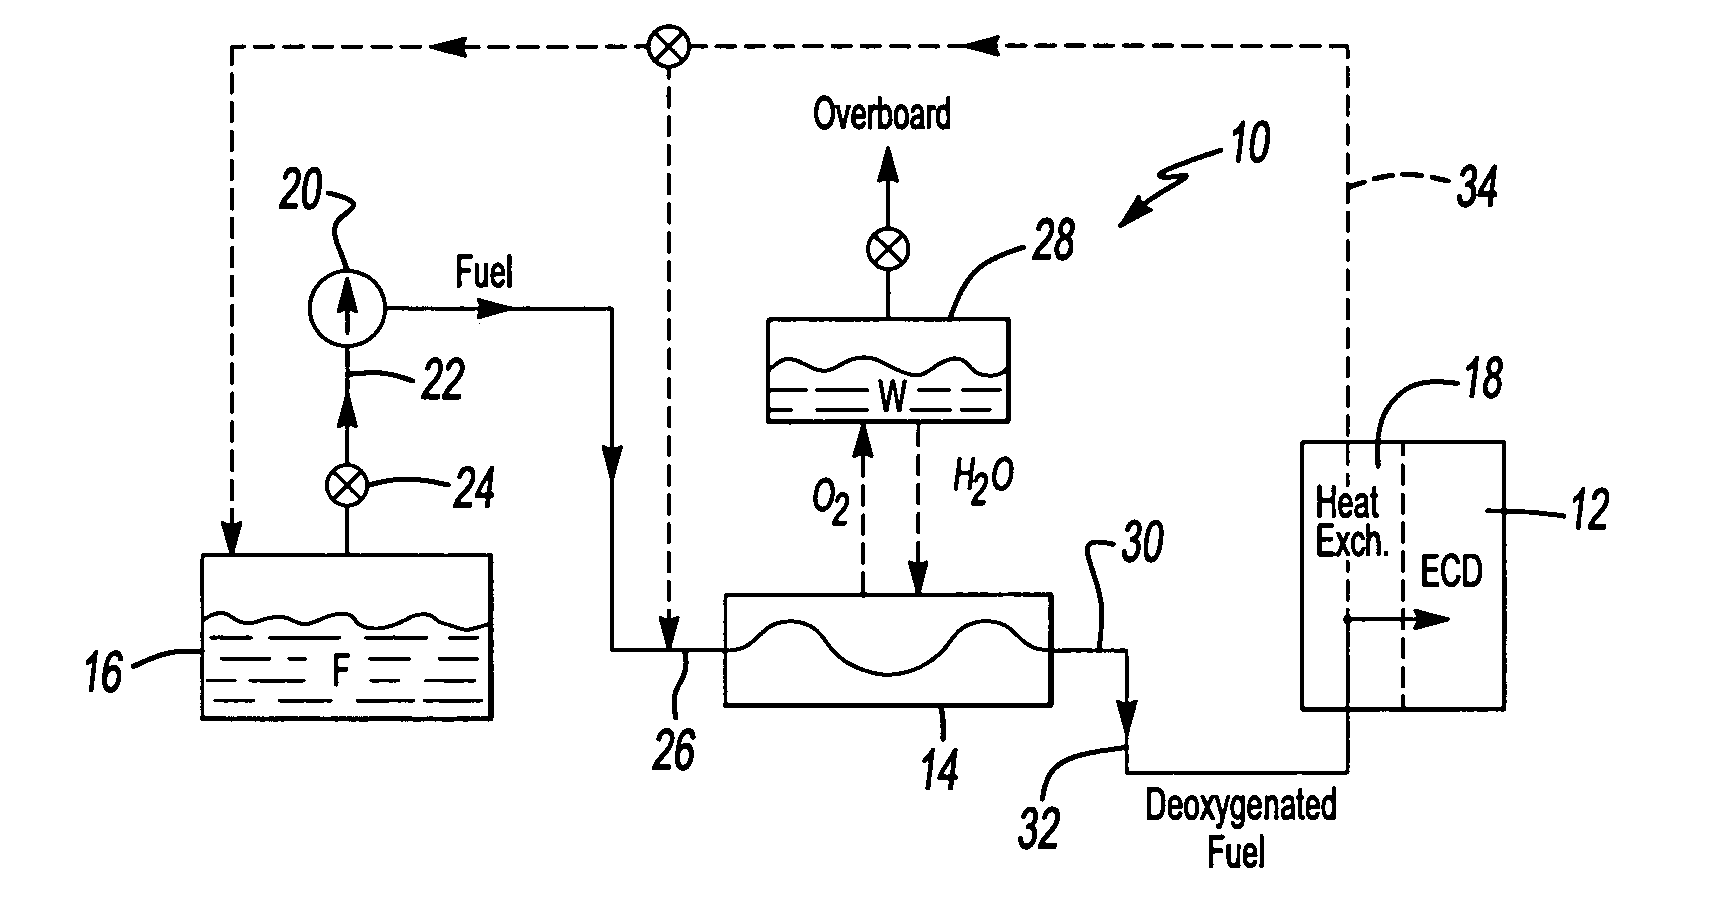 Electrochemical fuel deoxygenation system